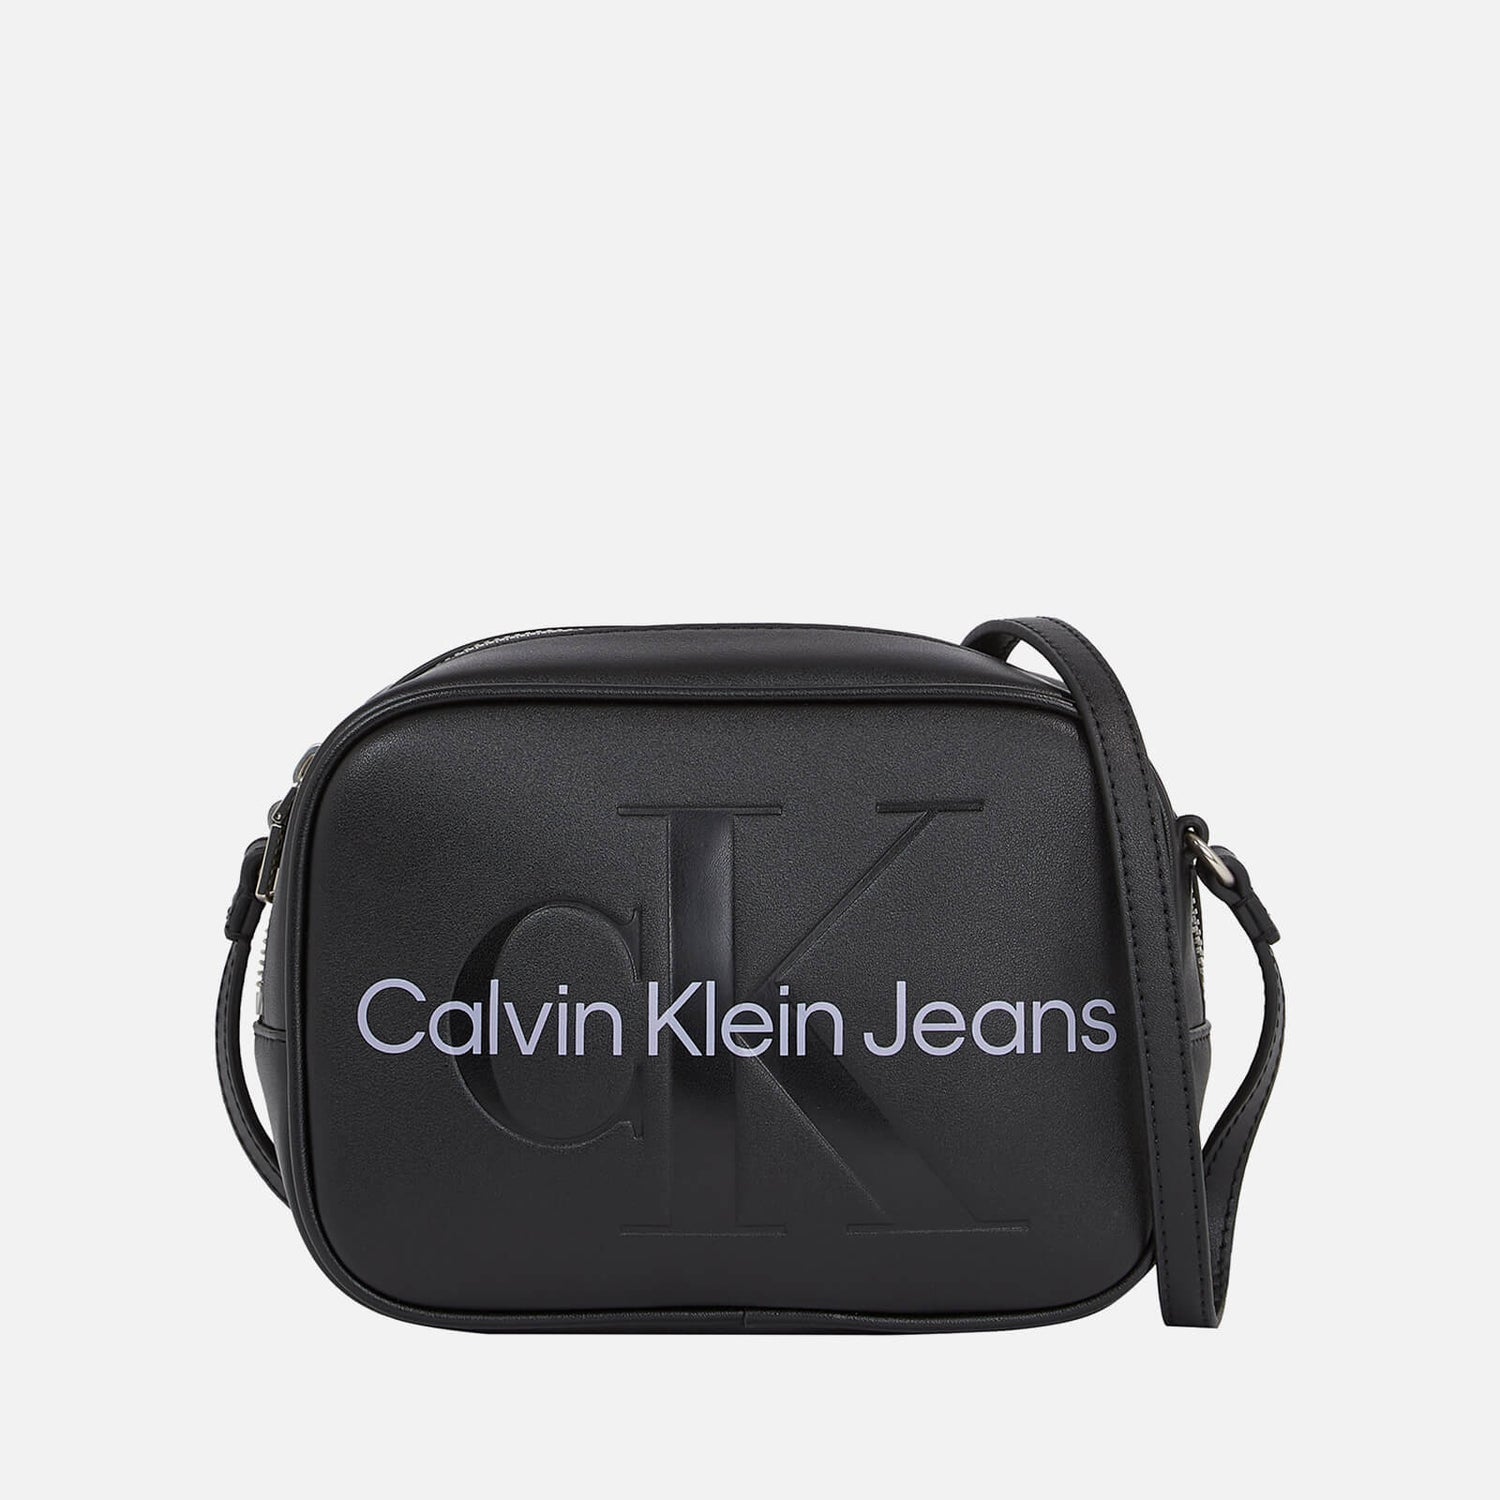 Calvin Klein Jeans Sculpted Monogram Faux Leather Camera Bag | TheHut.com